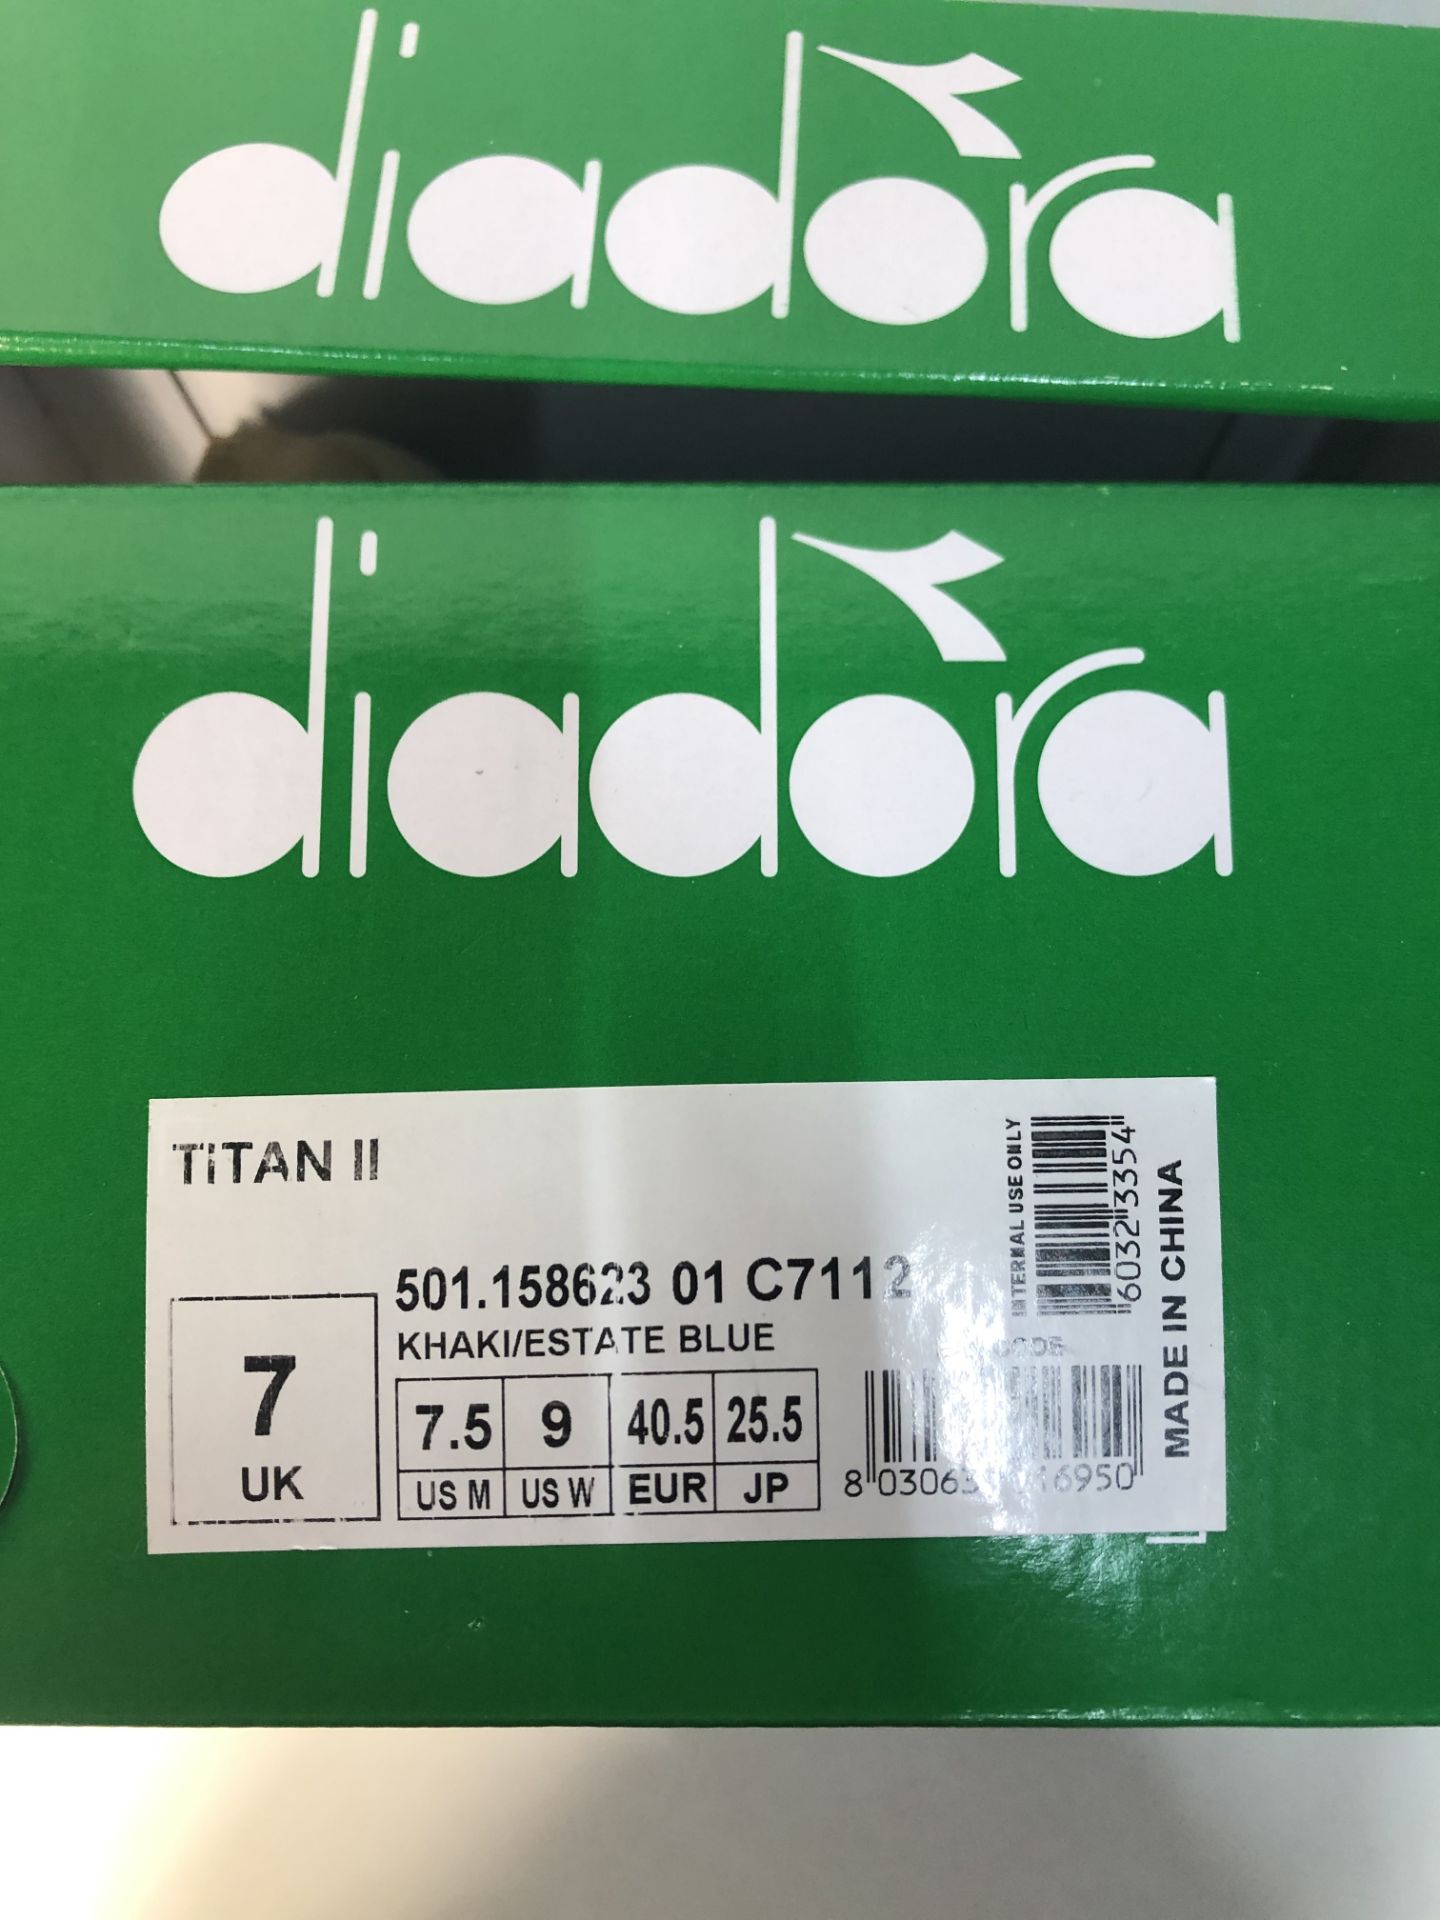 1 x Diadora Men's Titan Ii Low-Top Sneakers, Green (Khaki/Estate Blue), 7 UK 501.158623 Size: 7 UK - Image 3 of 3